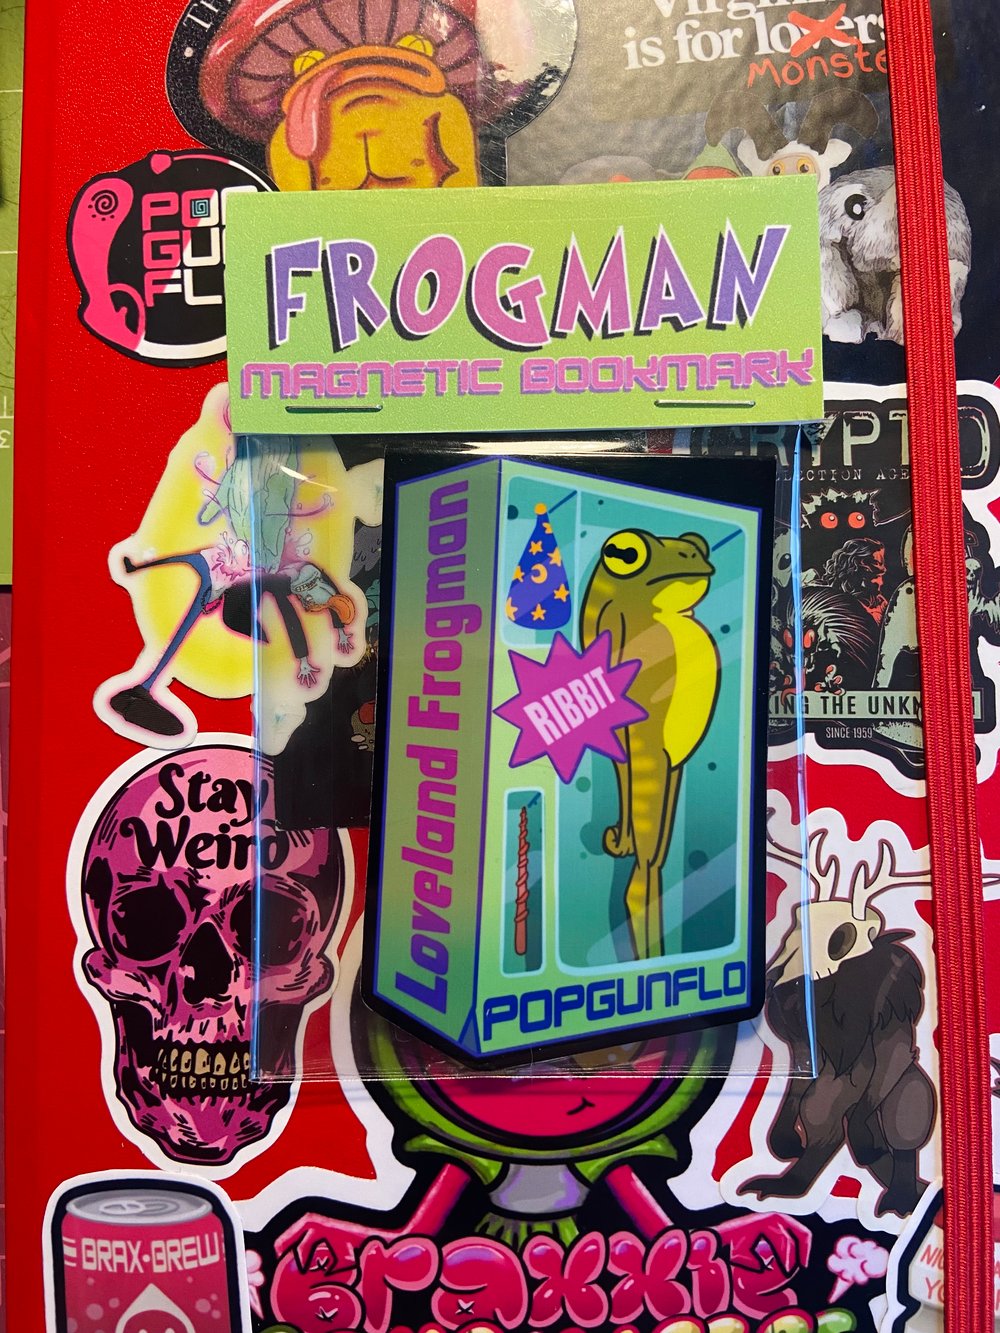 Loveland Frogman Magnetic Bookmark